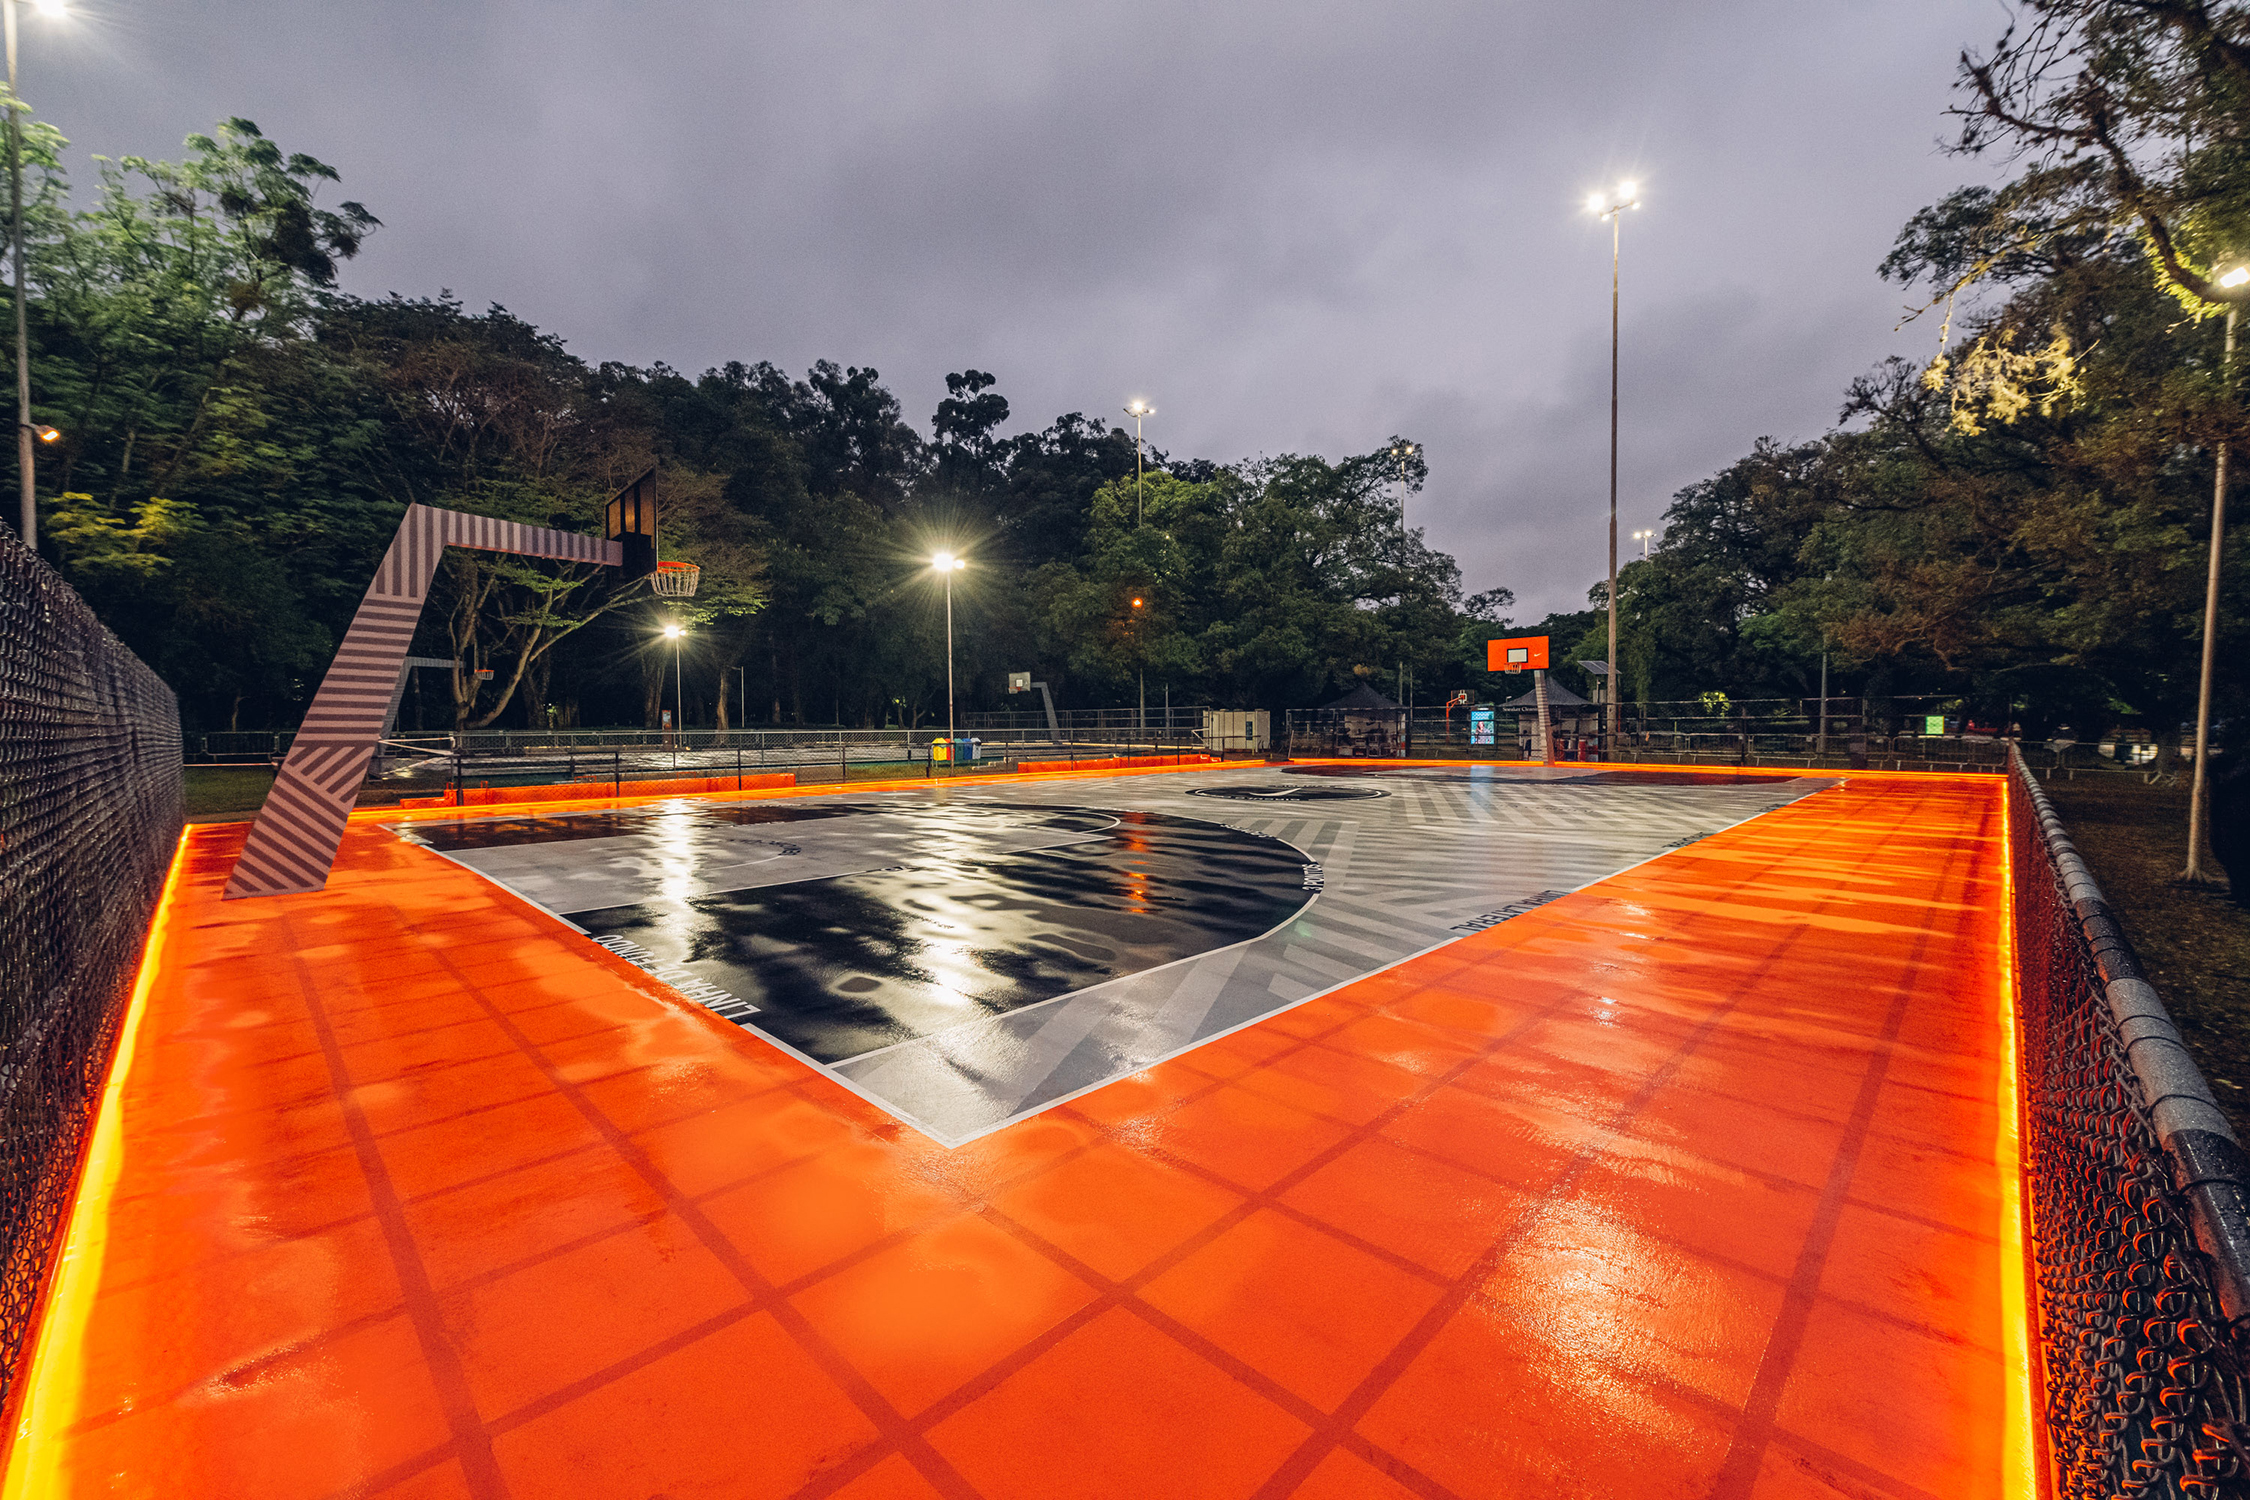 Nike Ibira - When the Urban Art meets sports court